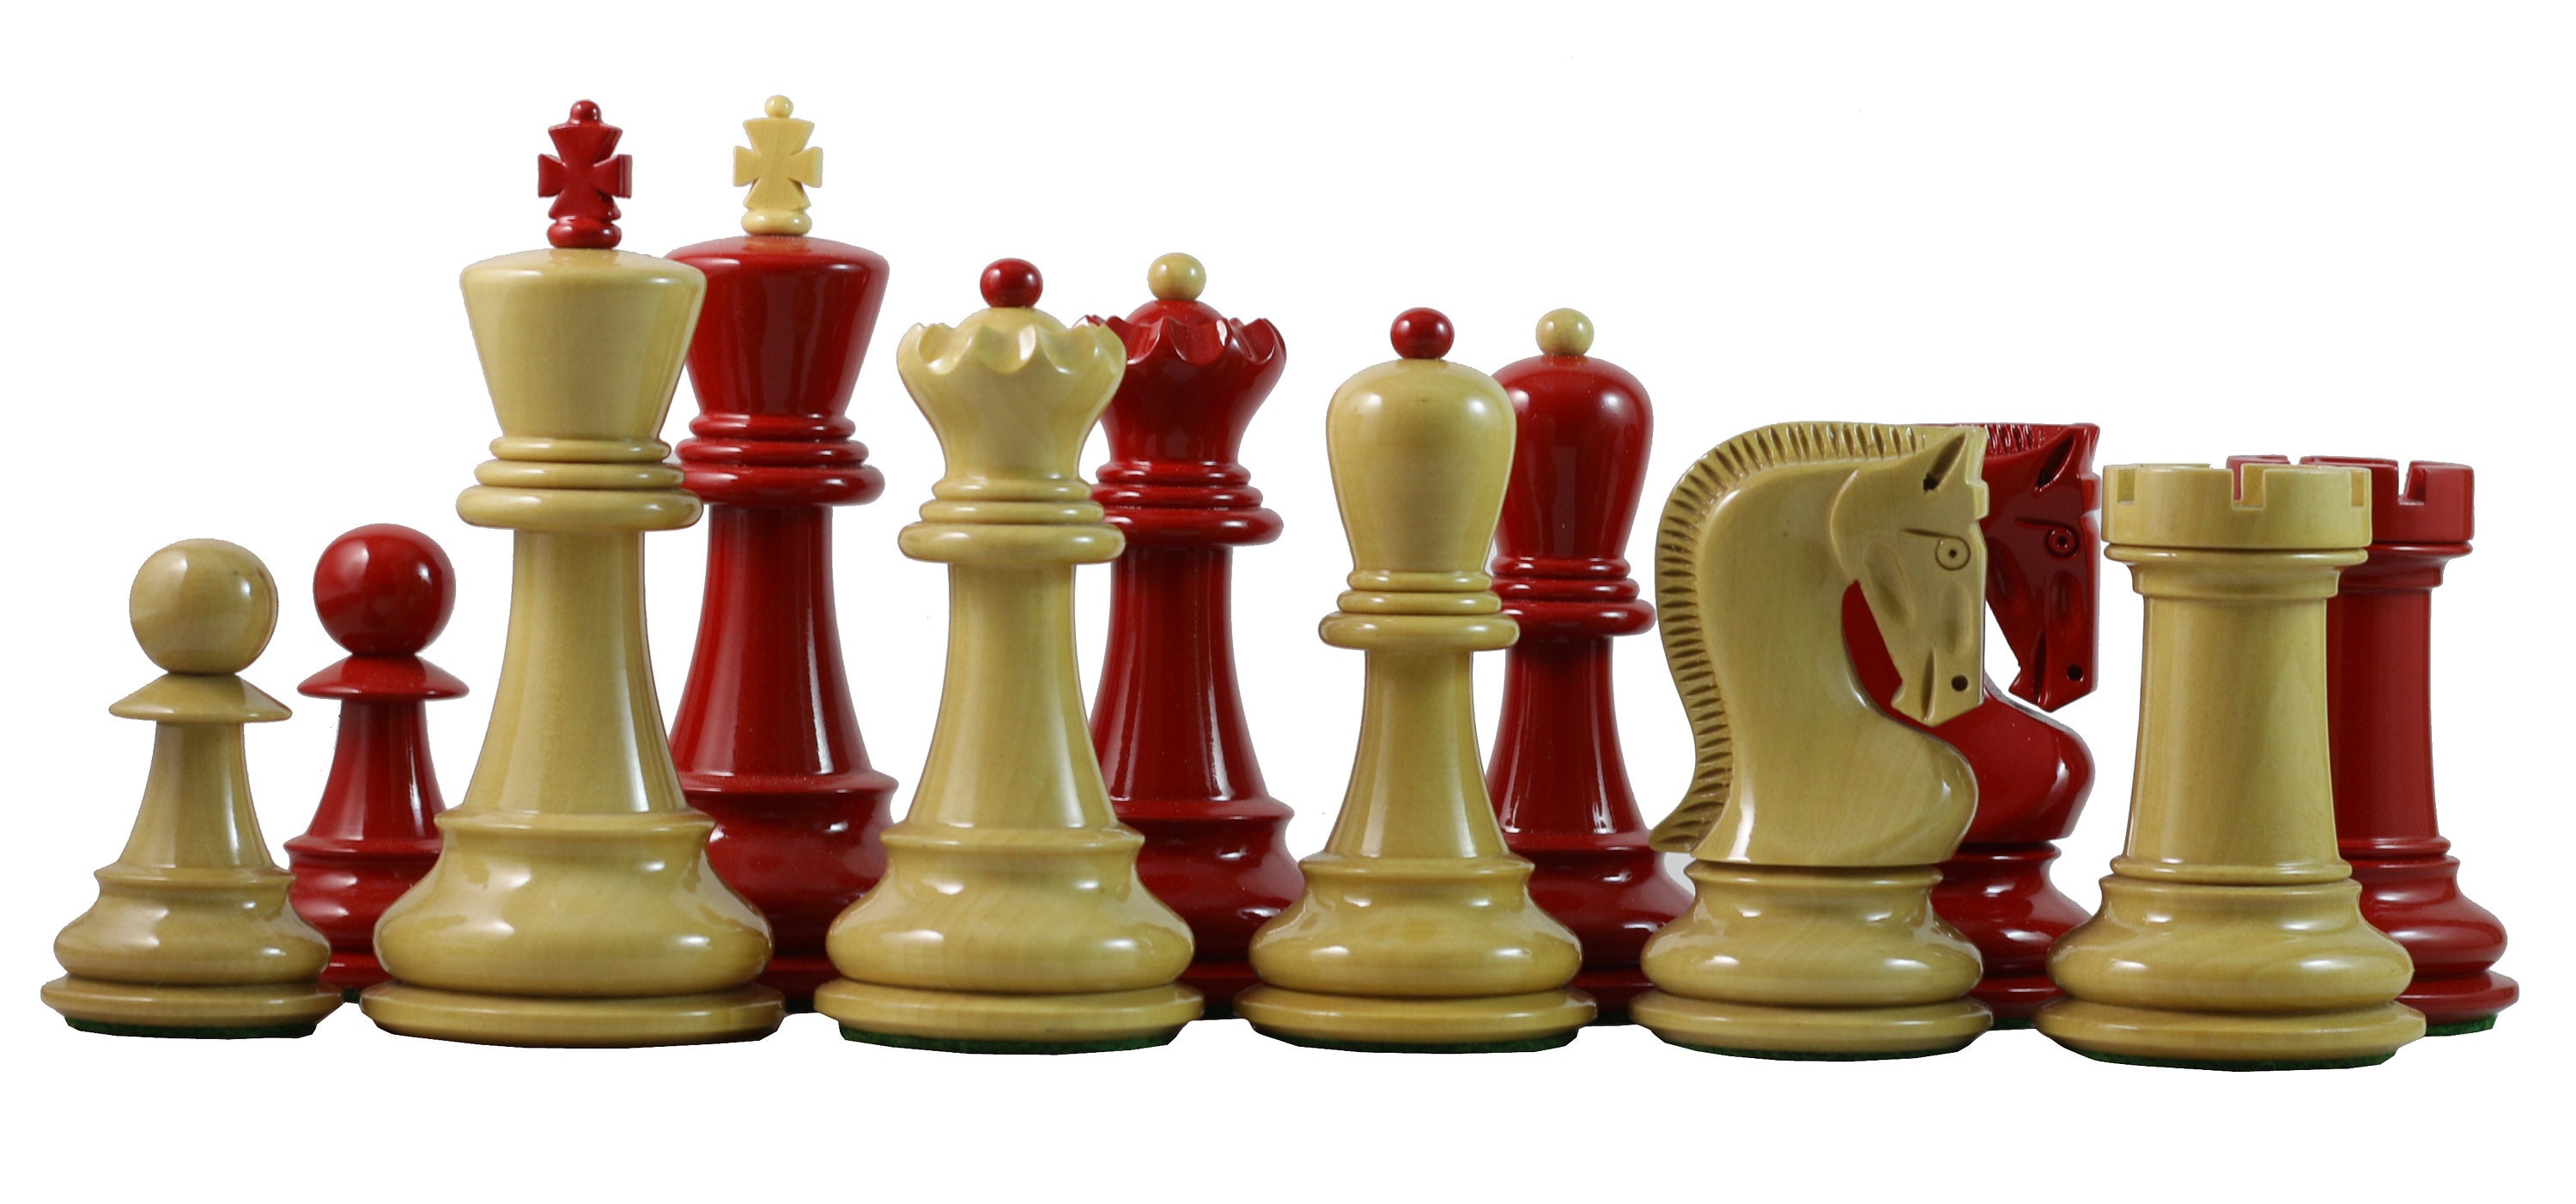 Zagreb Series Premium 3.75" Staunton Chessmen in Red and White Lacquered 